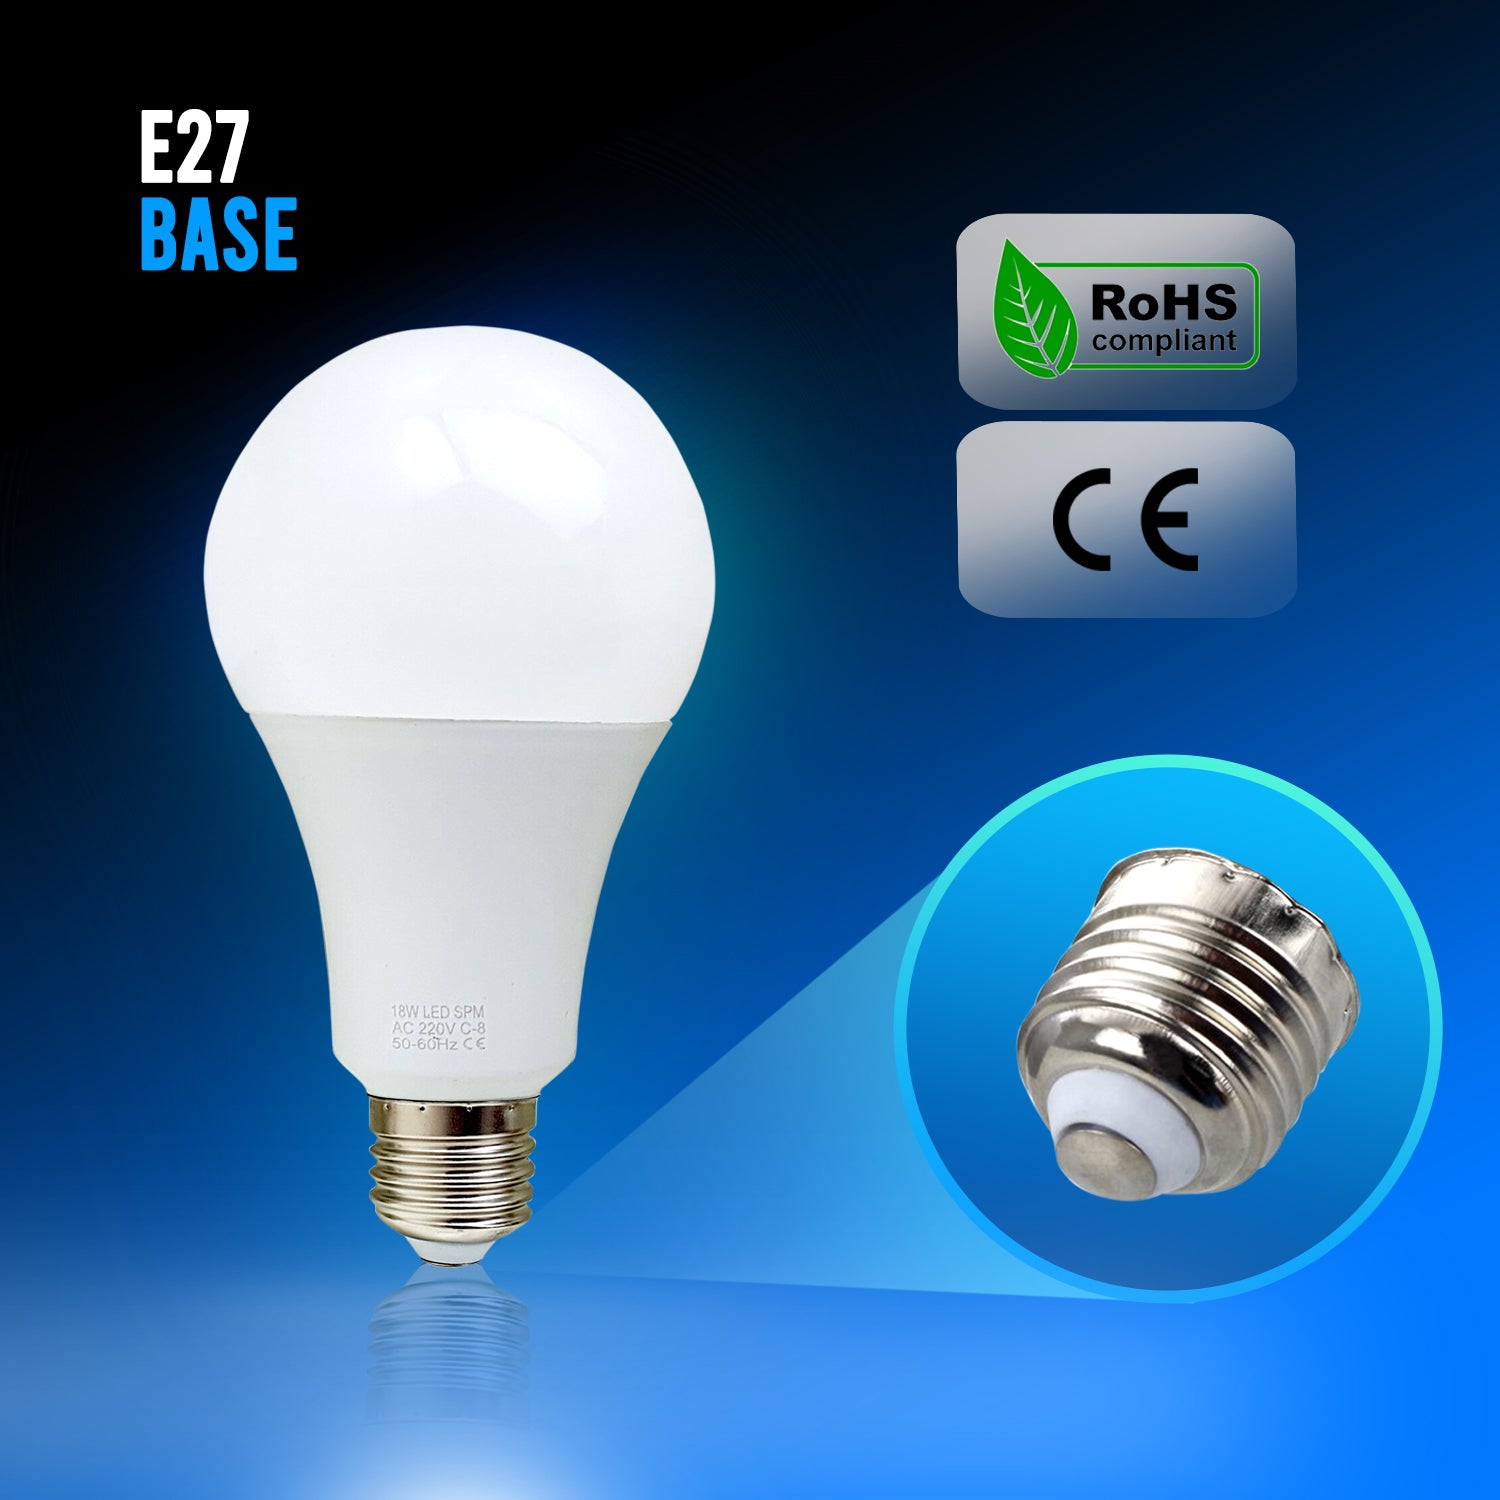 LED bulbs 5W E27 Screw Energy Saving Cool White incandescent bulb 2 pack~4477